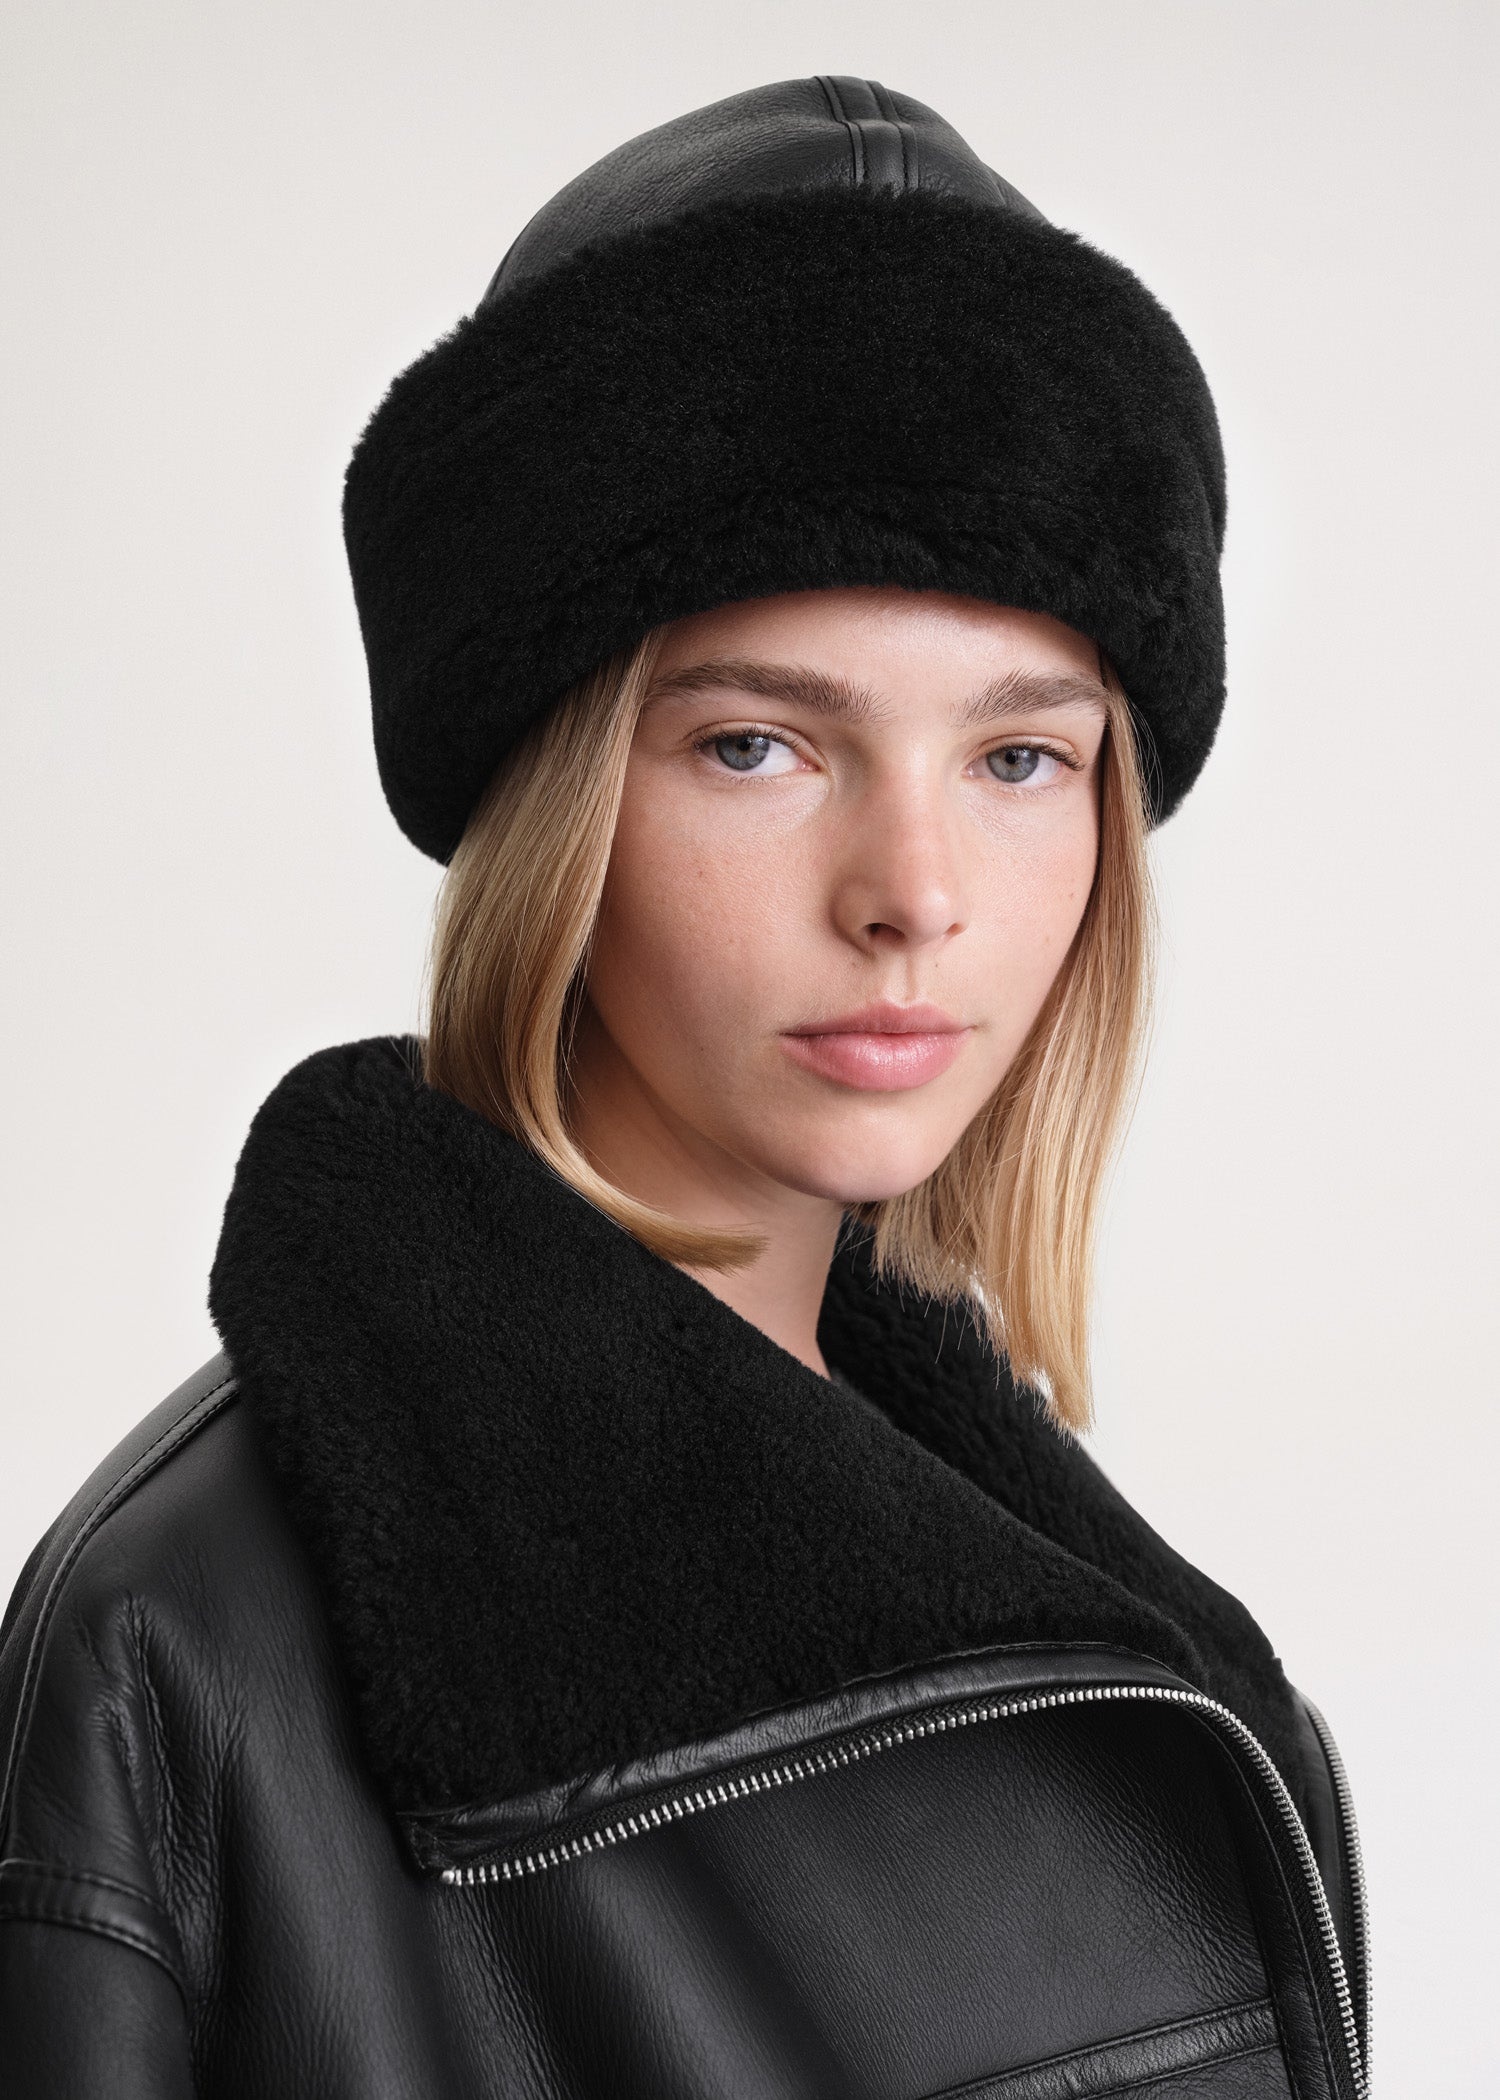 Shearling winter hat black - 2